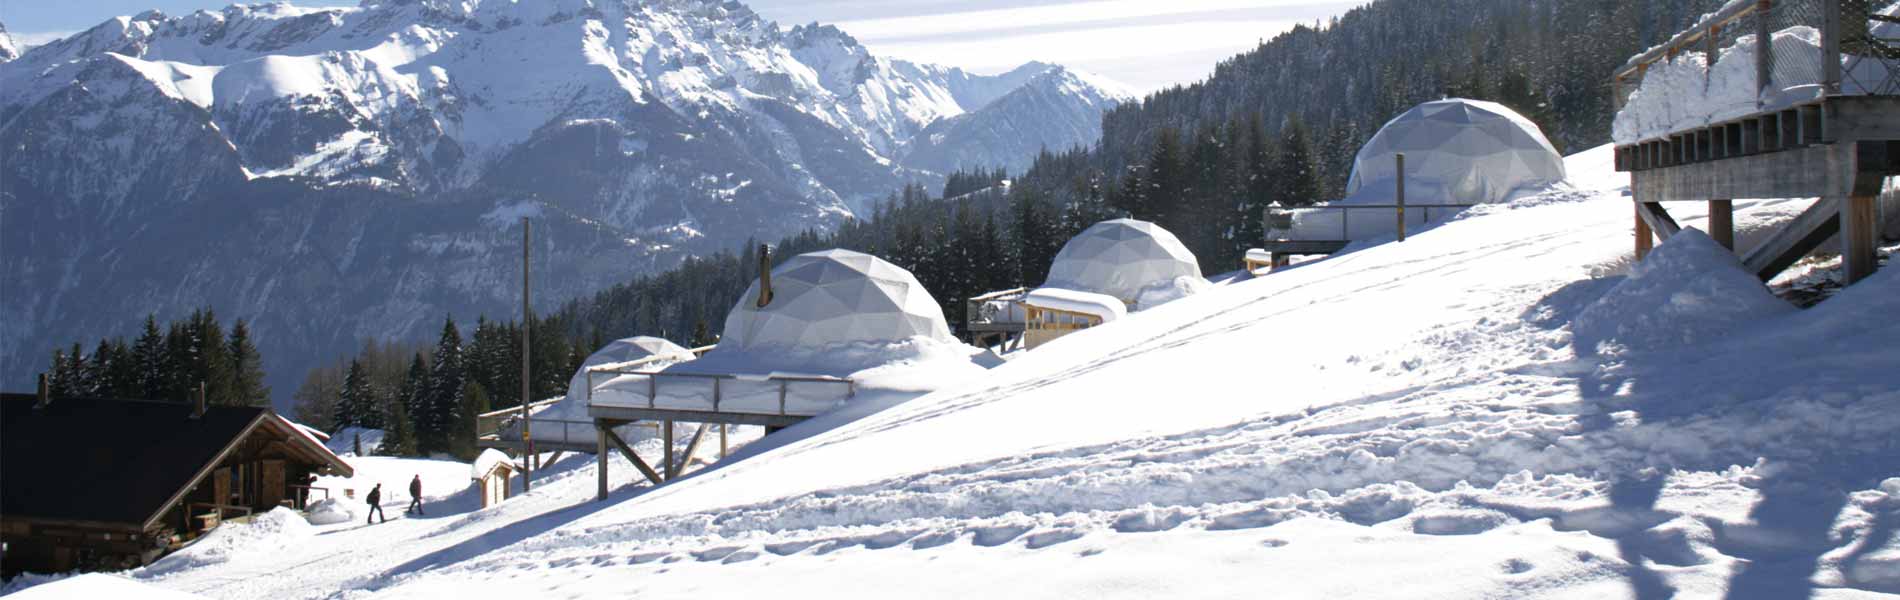 Winterizing a geodesic dome